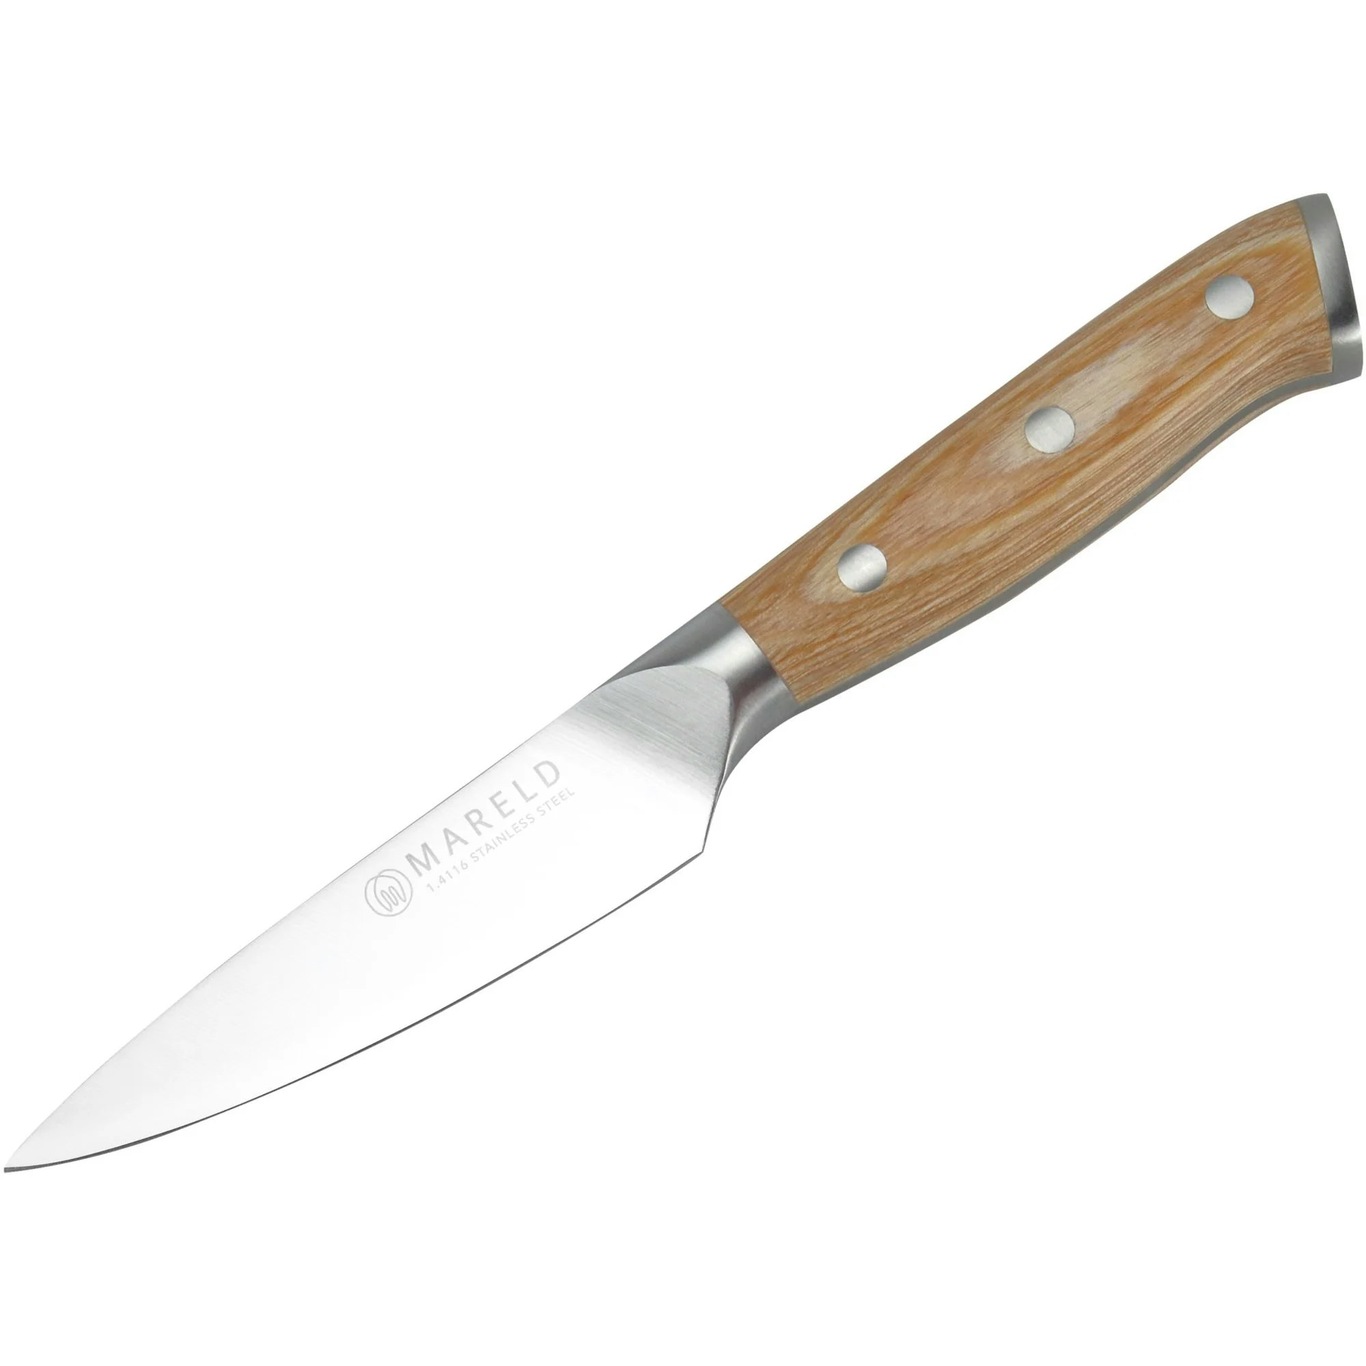 https://royaldesign.com/image/2/mareld-paring-knife-9-cm-pakka-wood-1?w=800&quality=80